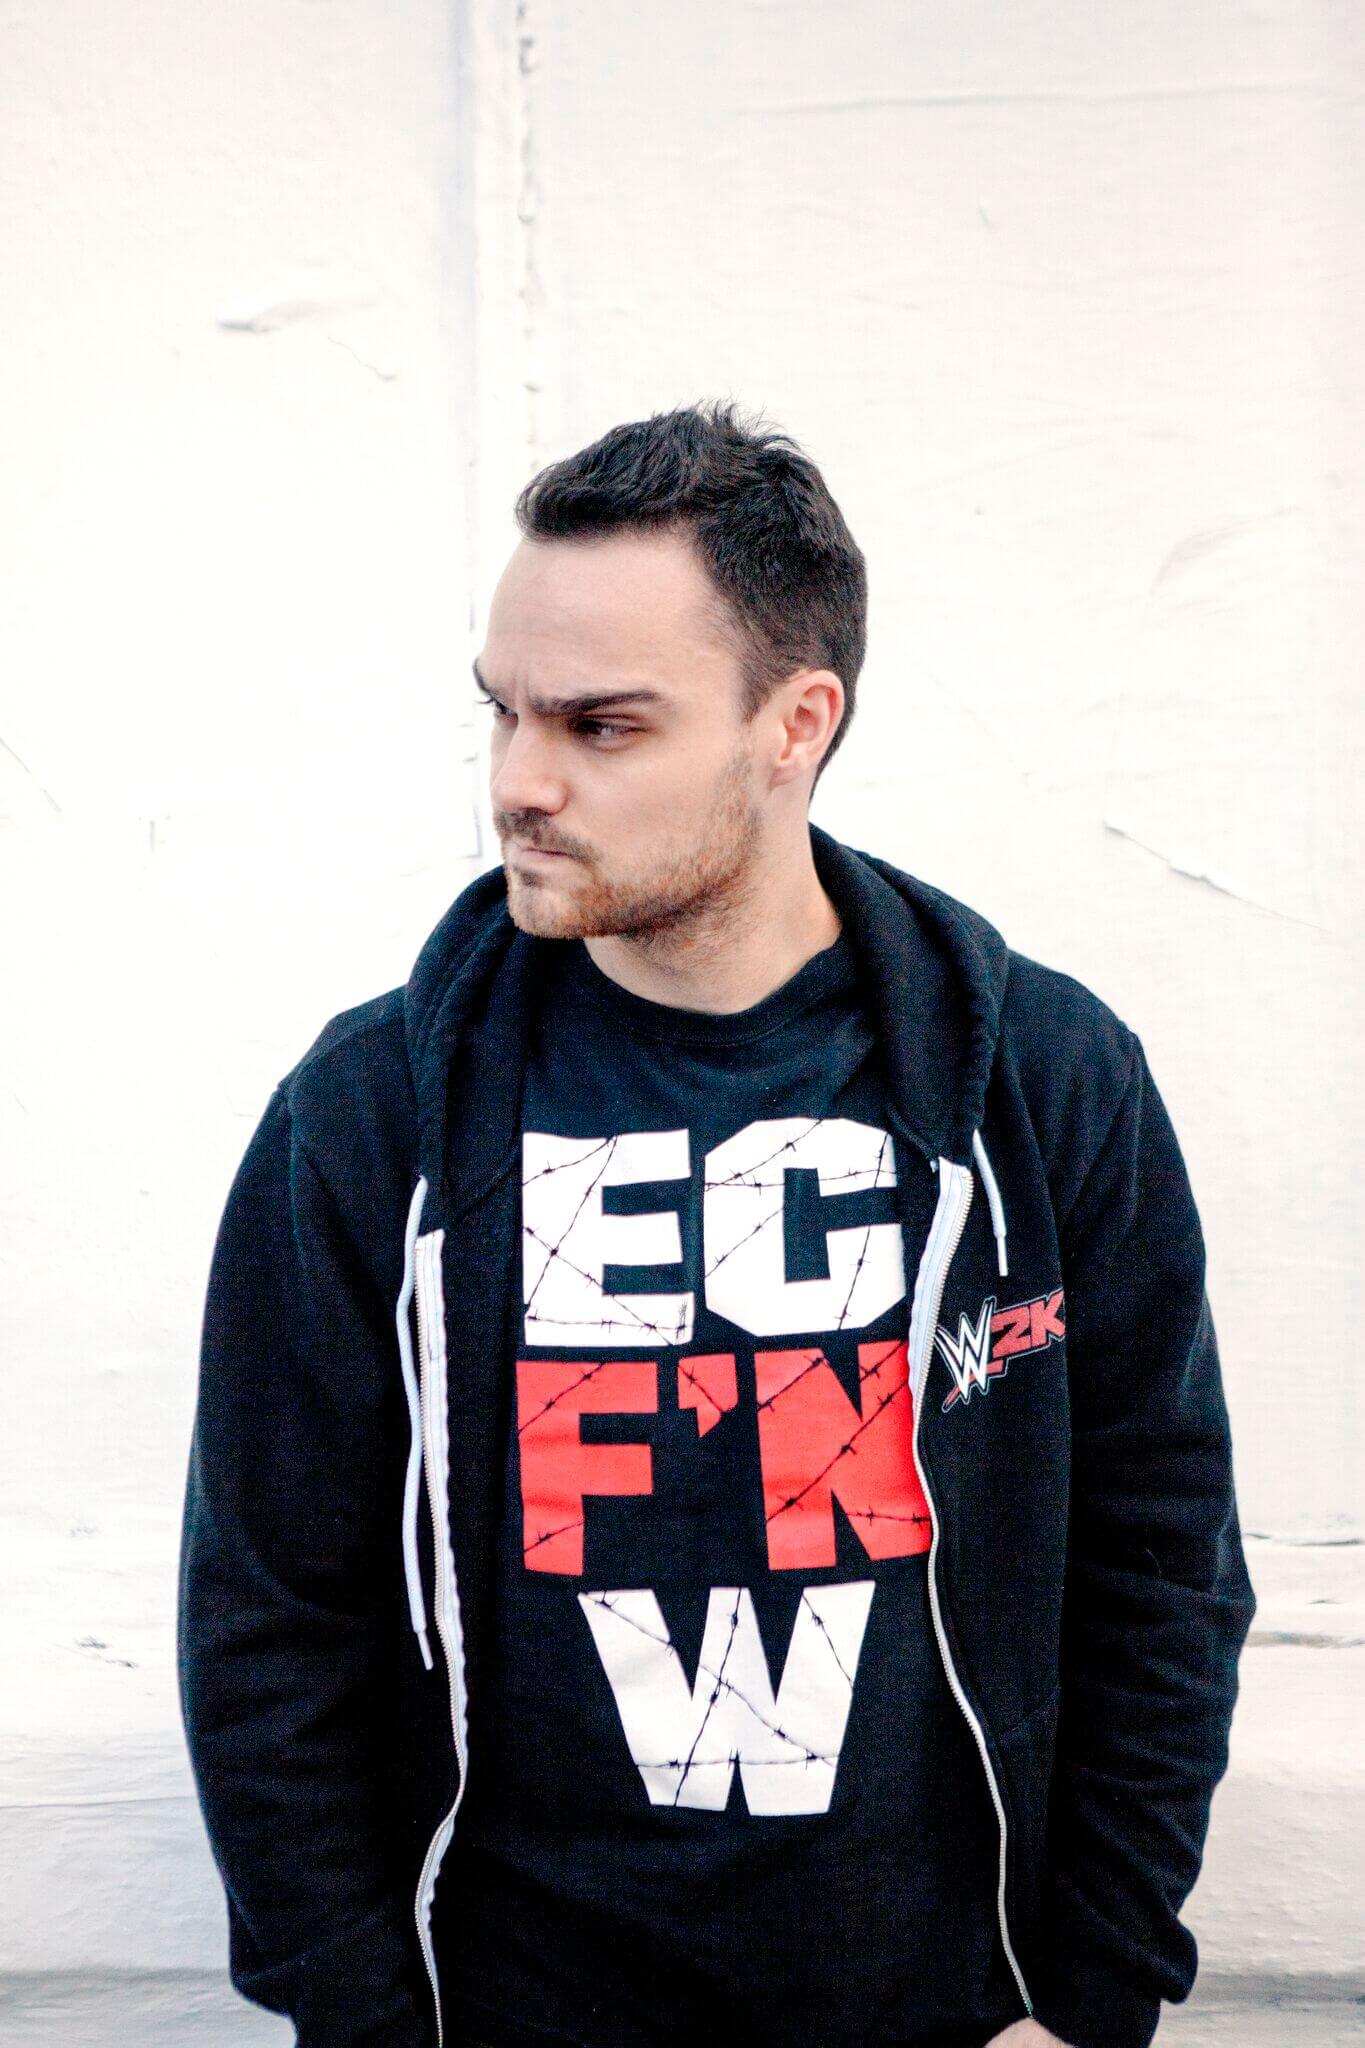 SKAM Artist DJ Jamie Iovine - Meet the SKAM Artist